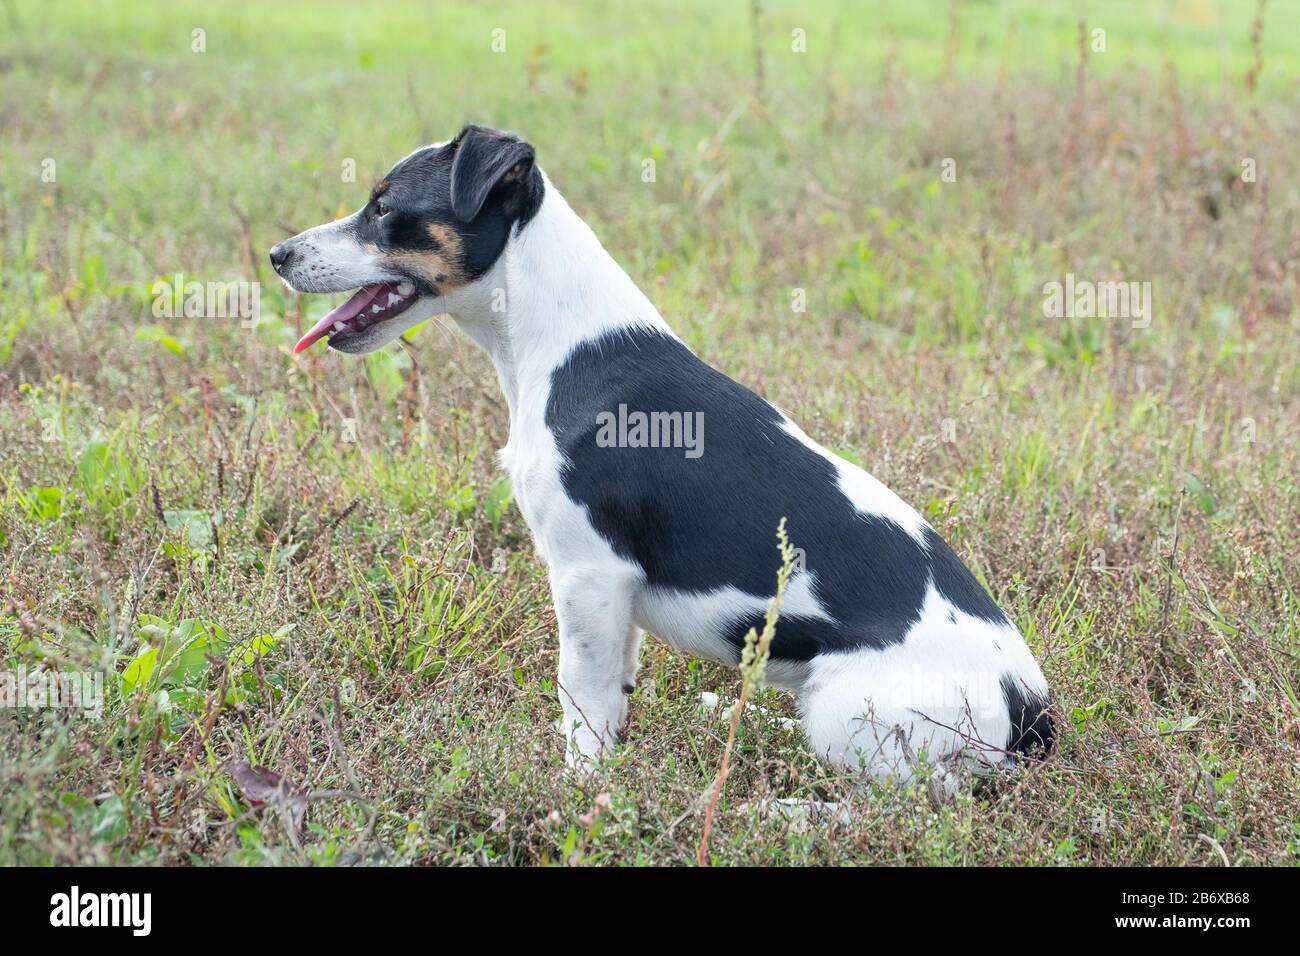 Black White Jack Russell Terrier Stock Photos & Black White Jack ...